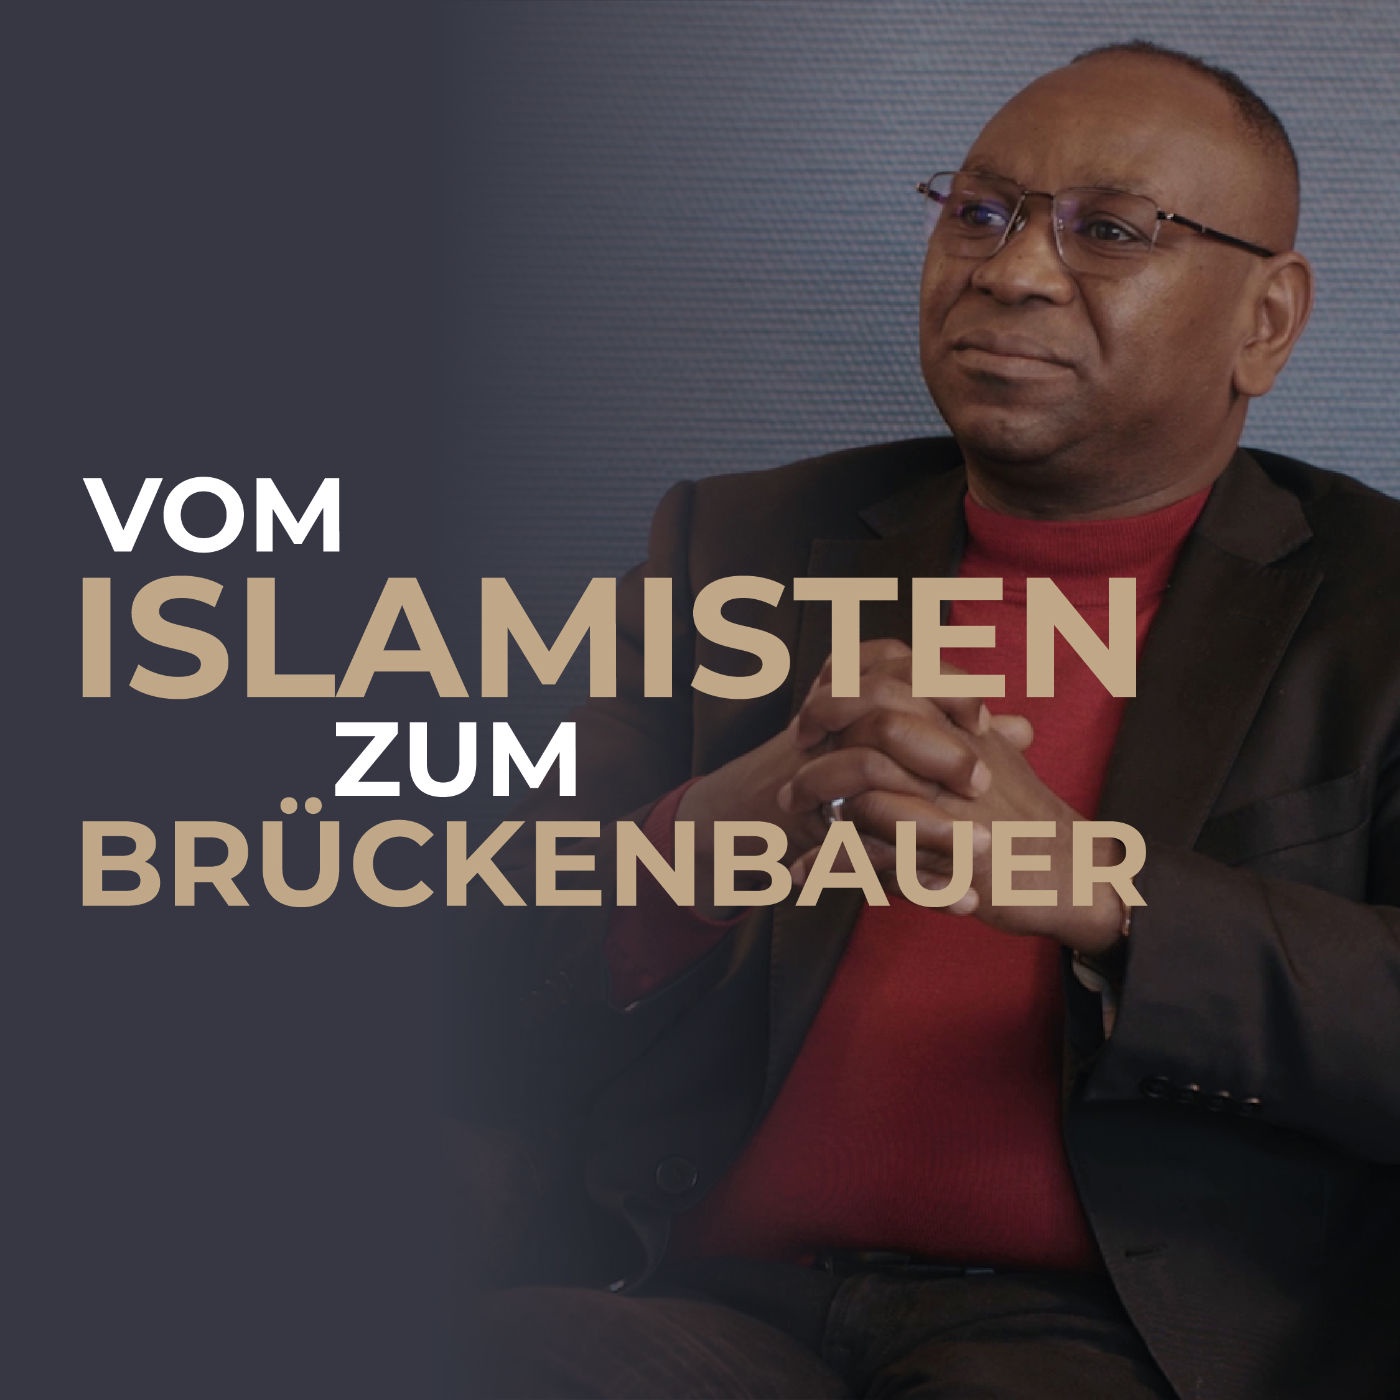 Radikaler Islam, Ideale und Integration